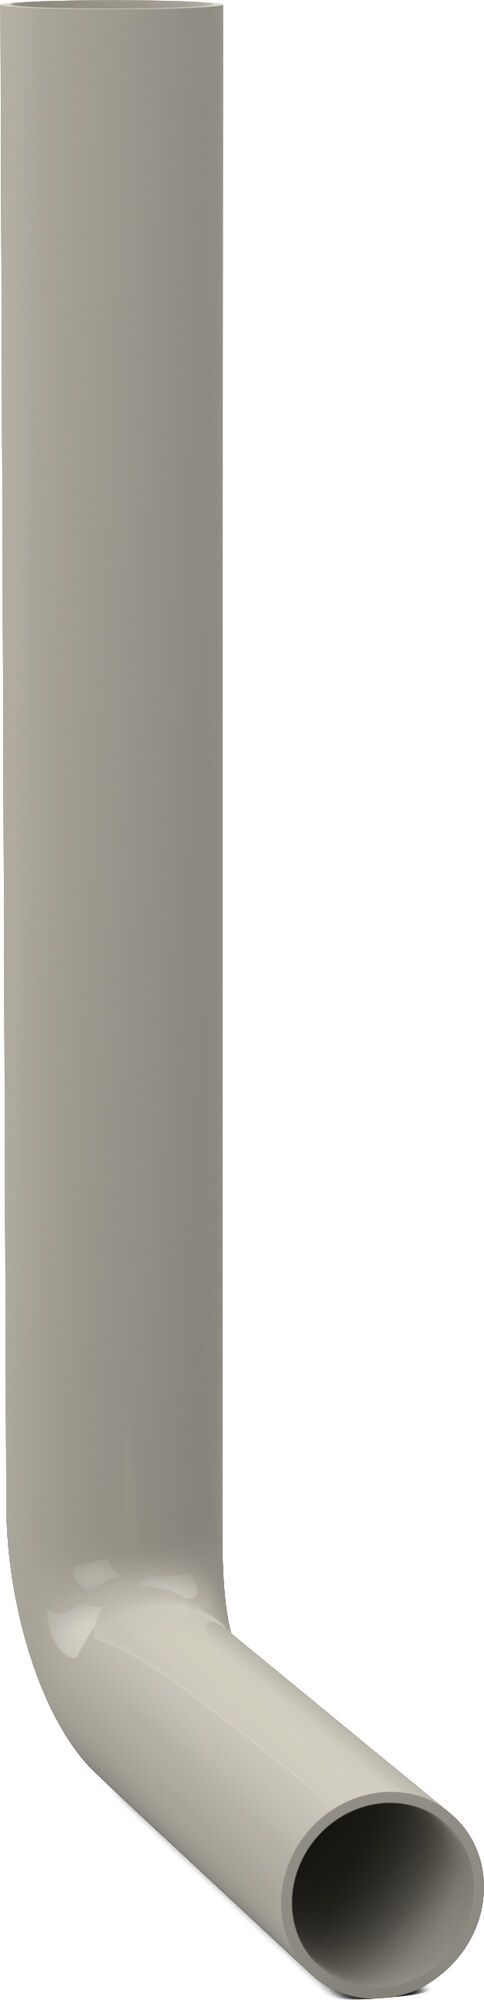 SPÜLROHRBOGEN 380 x 210 mm, pergamon